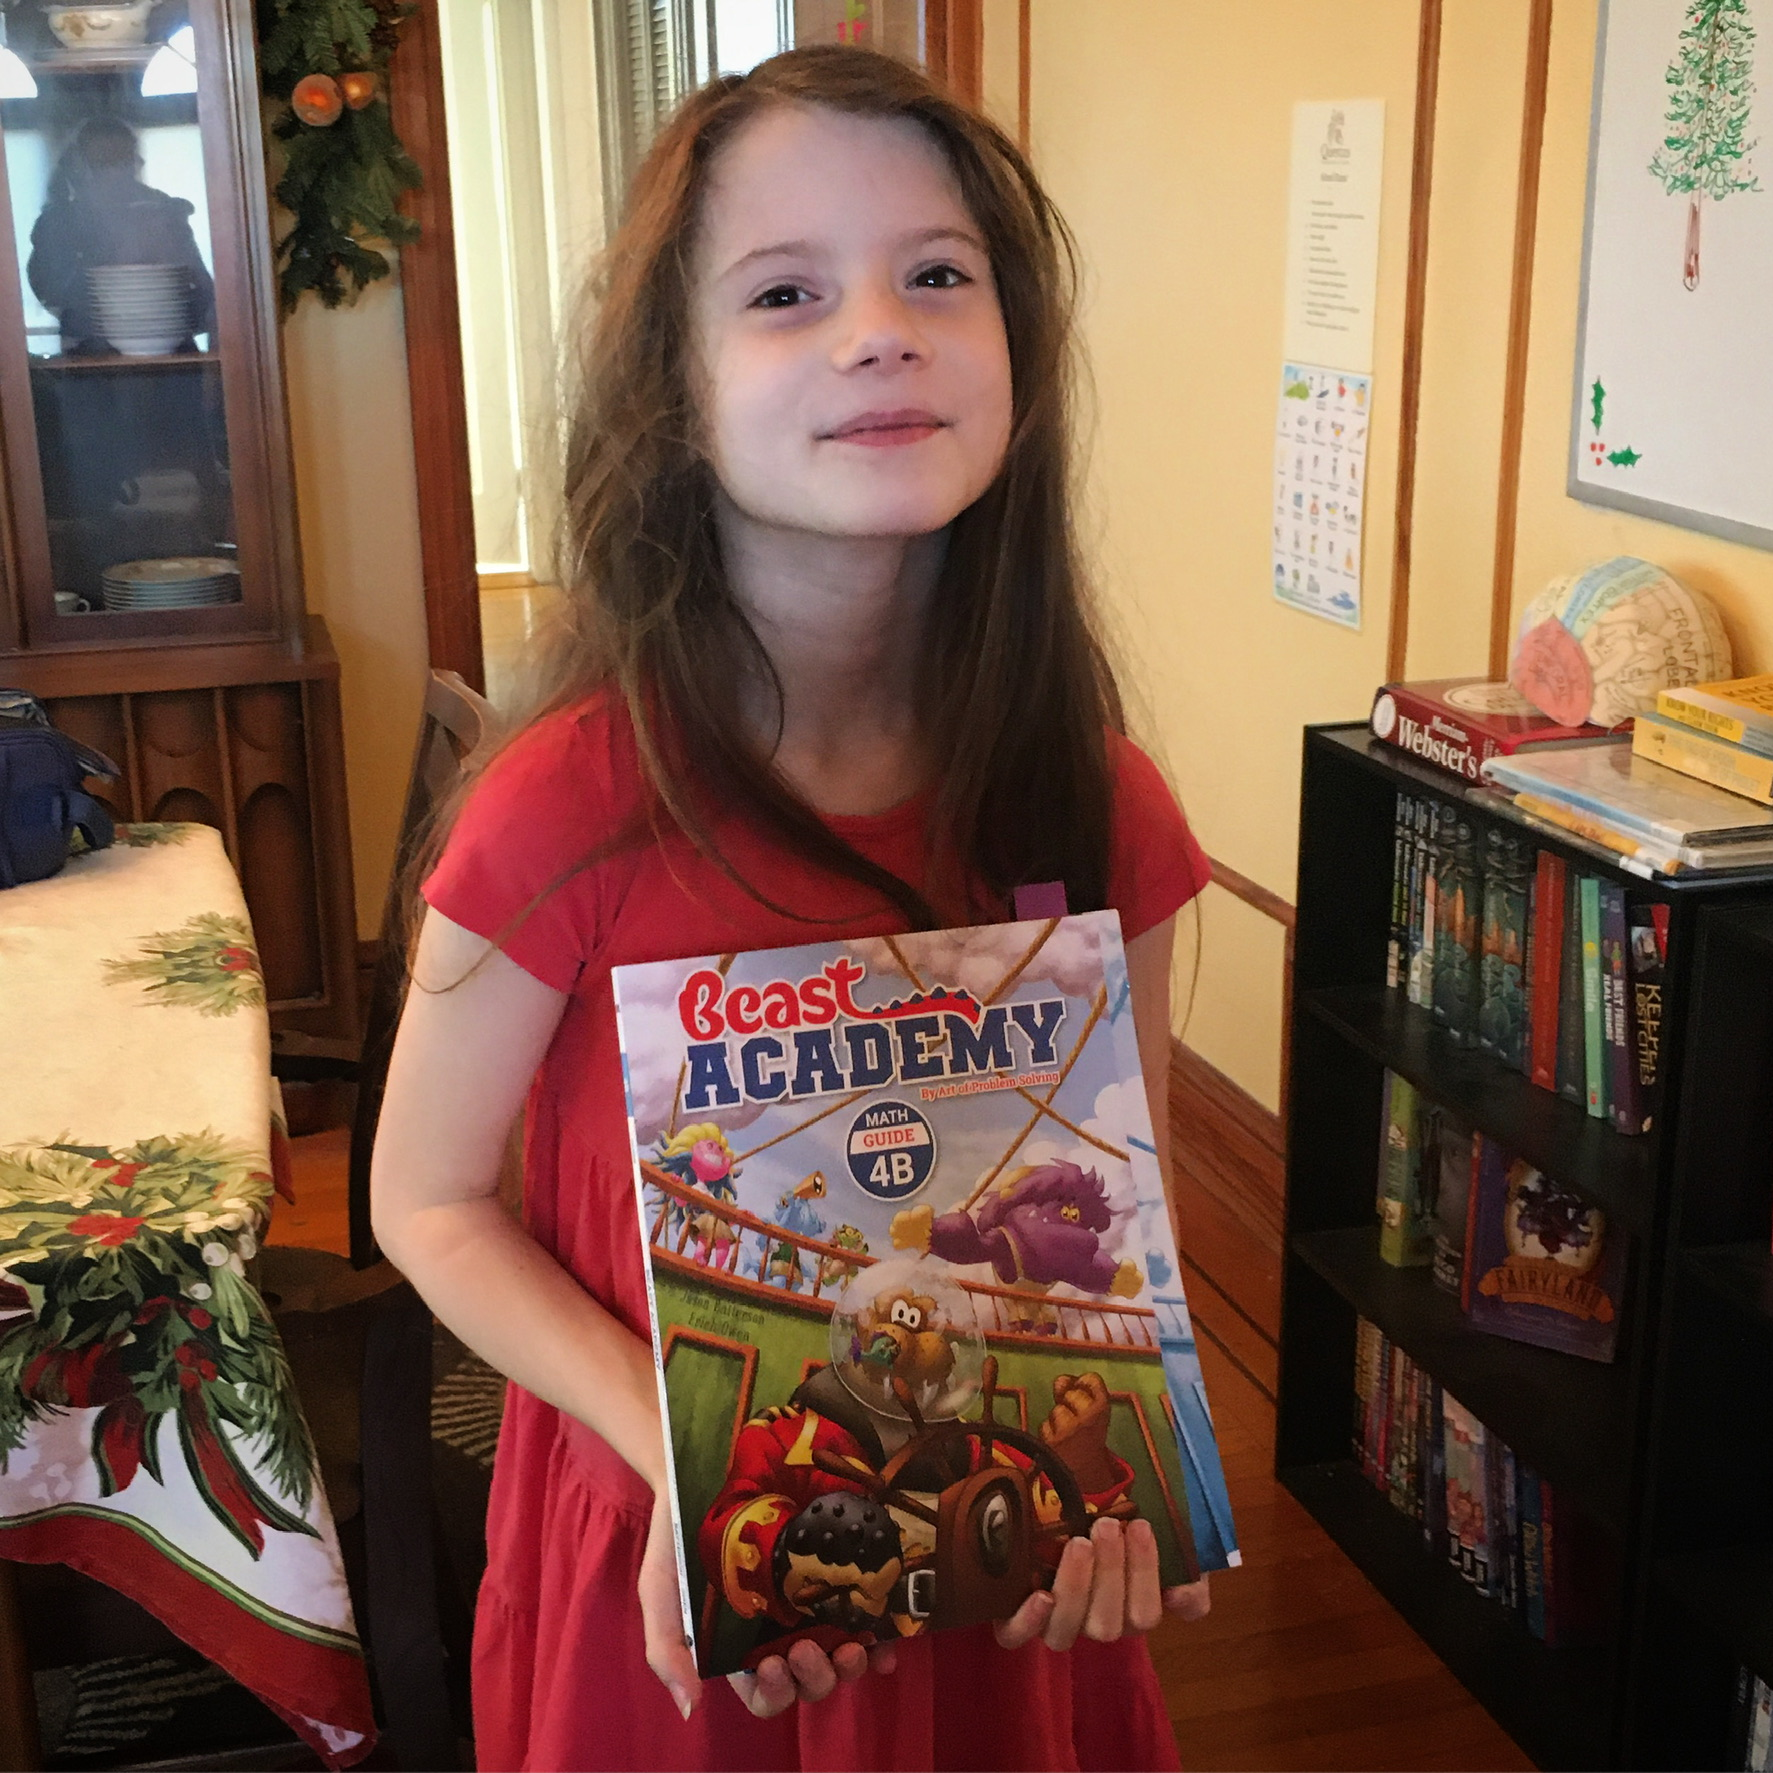 Wanda, an 8-year-old girl, holding the colorful math book Beast Academy 4B.